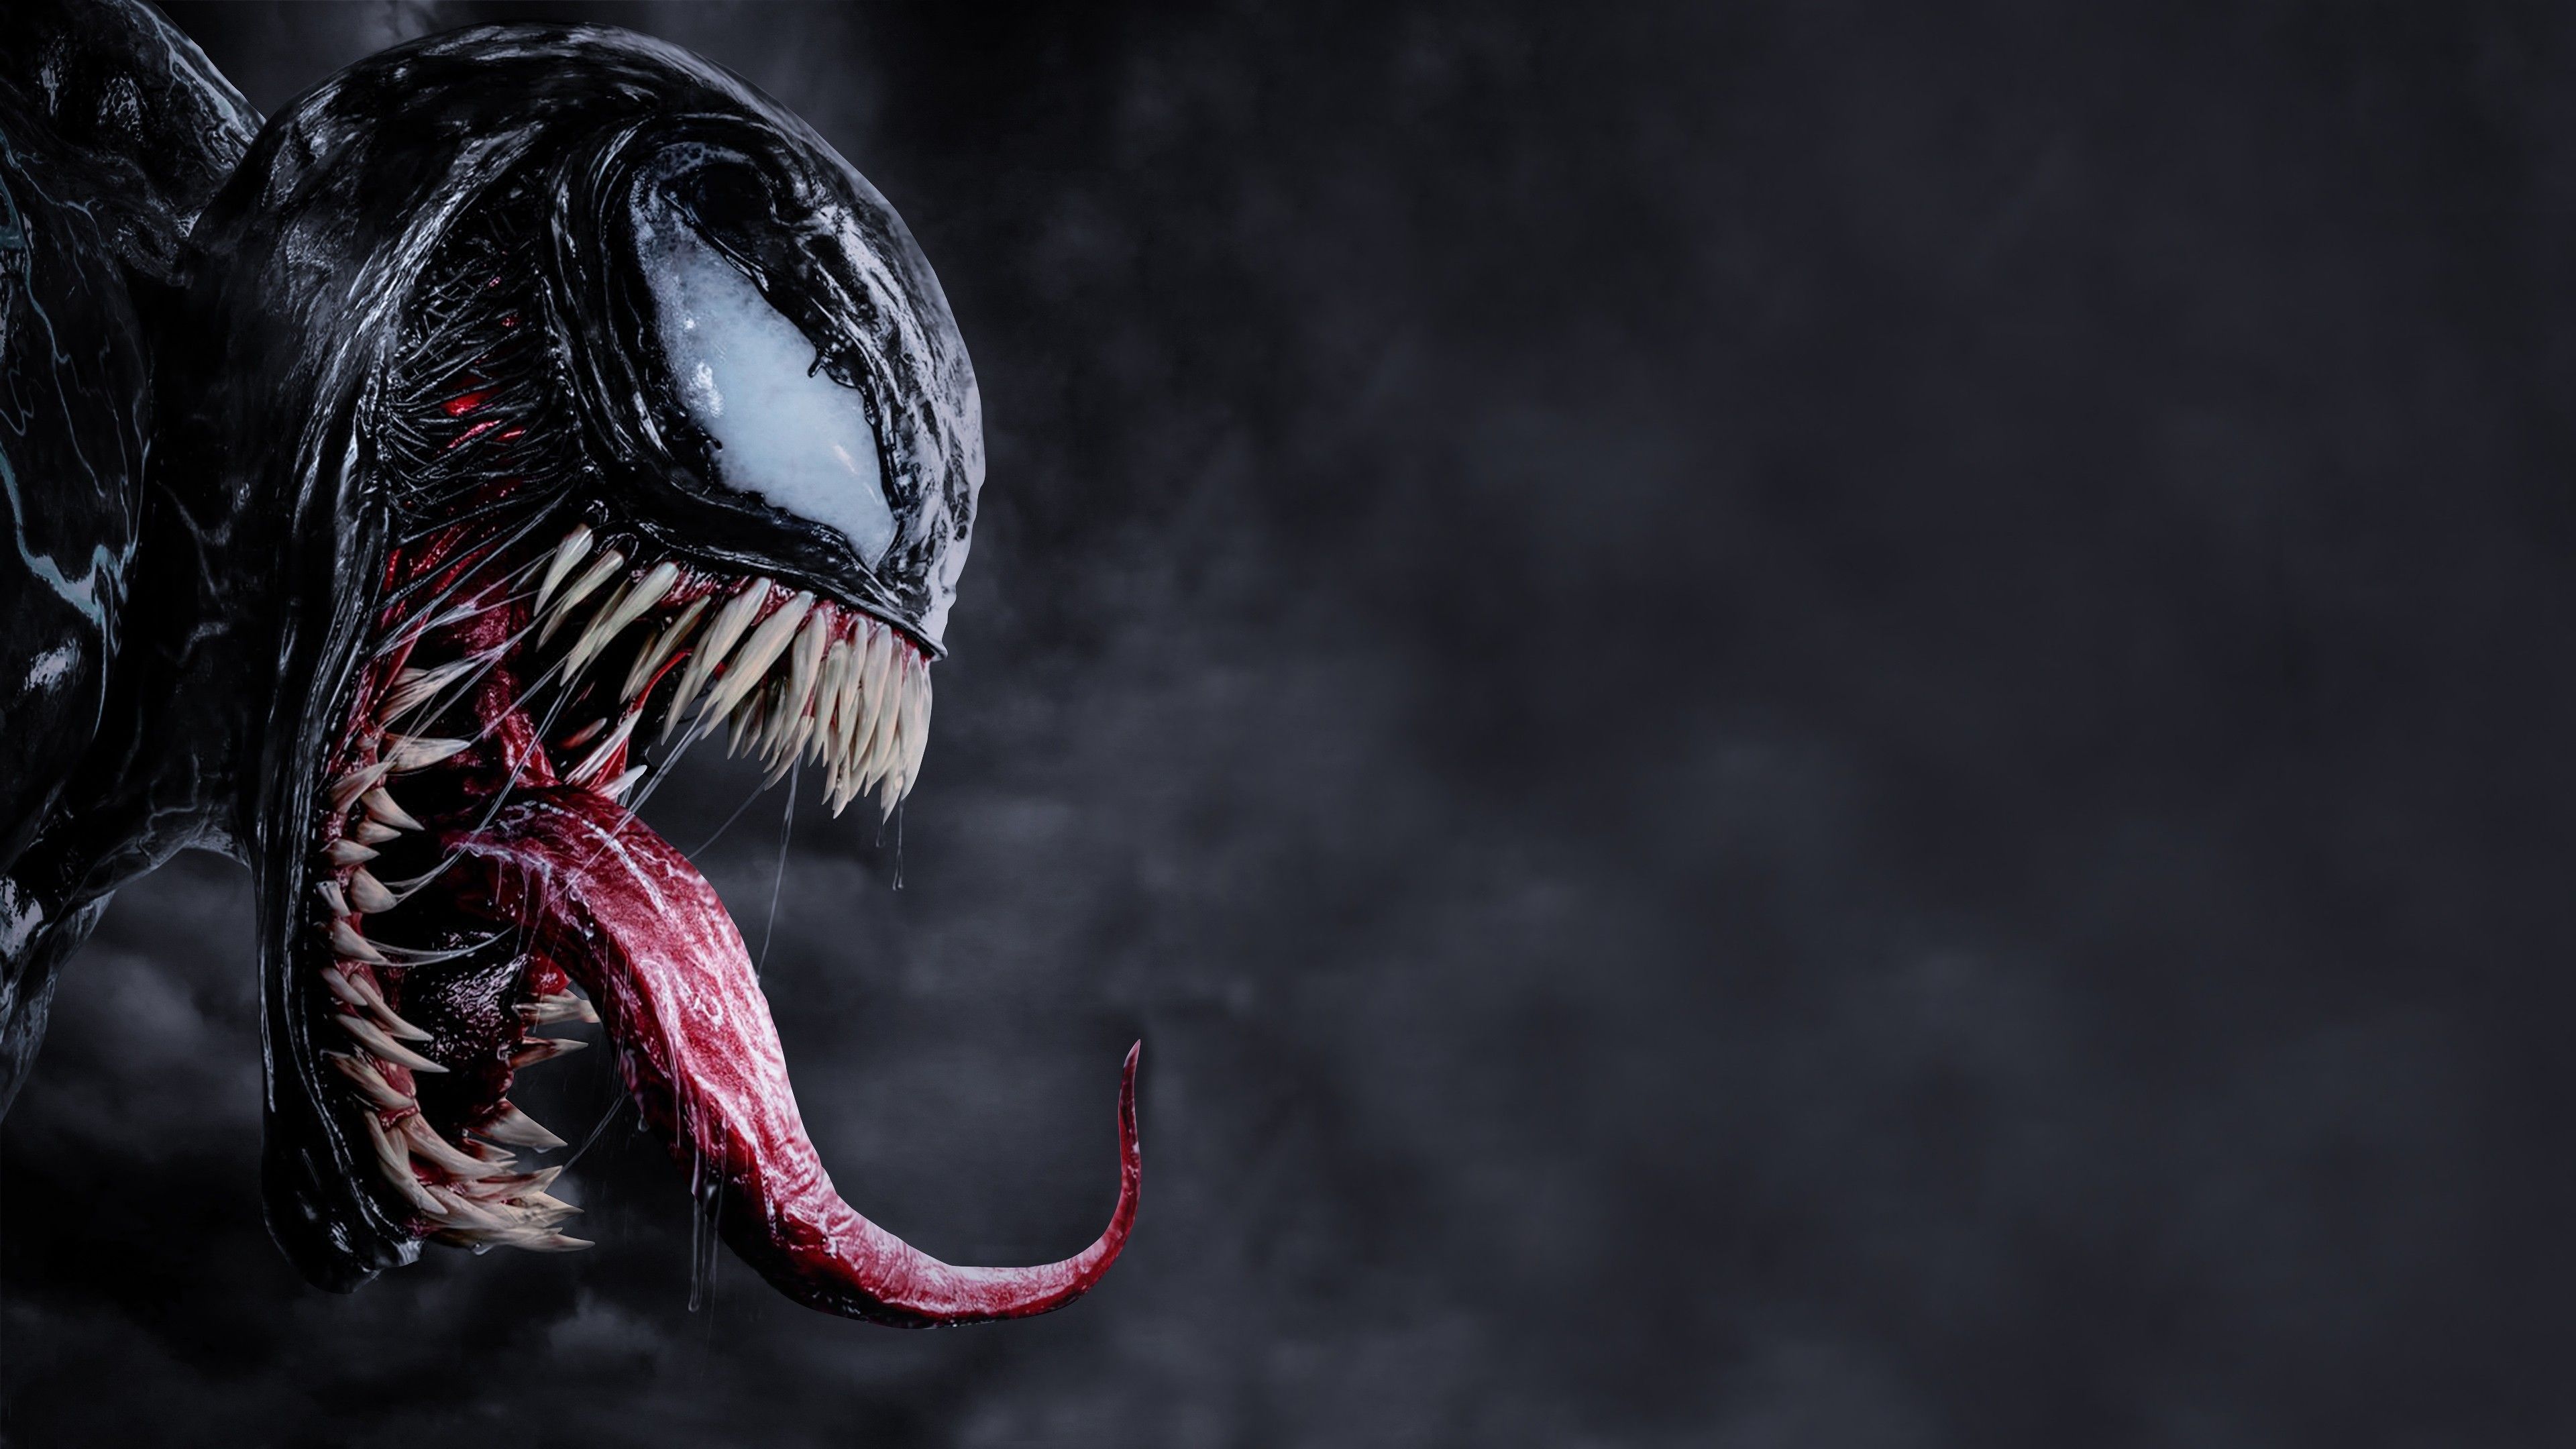 Venom Tom Hardy 4K. Venom movie, Android wallpaper, Spiderman artwork